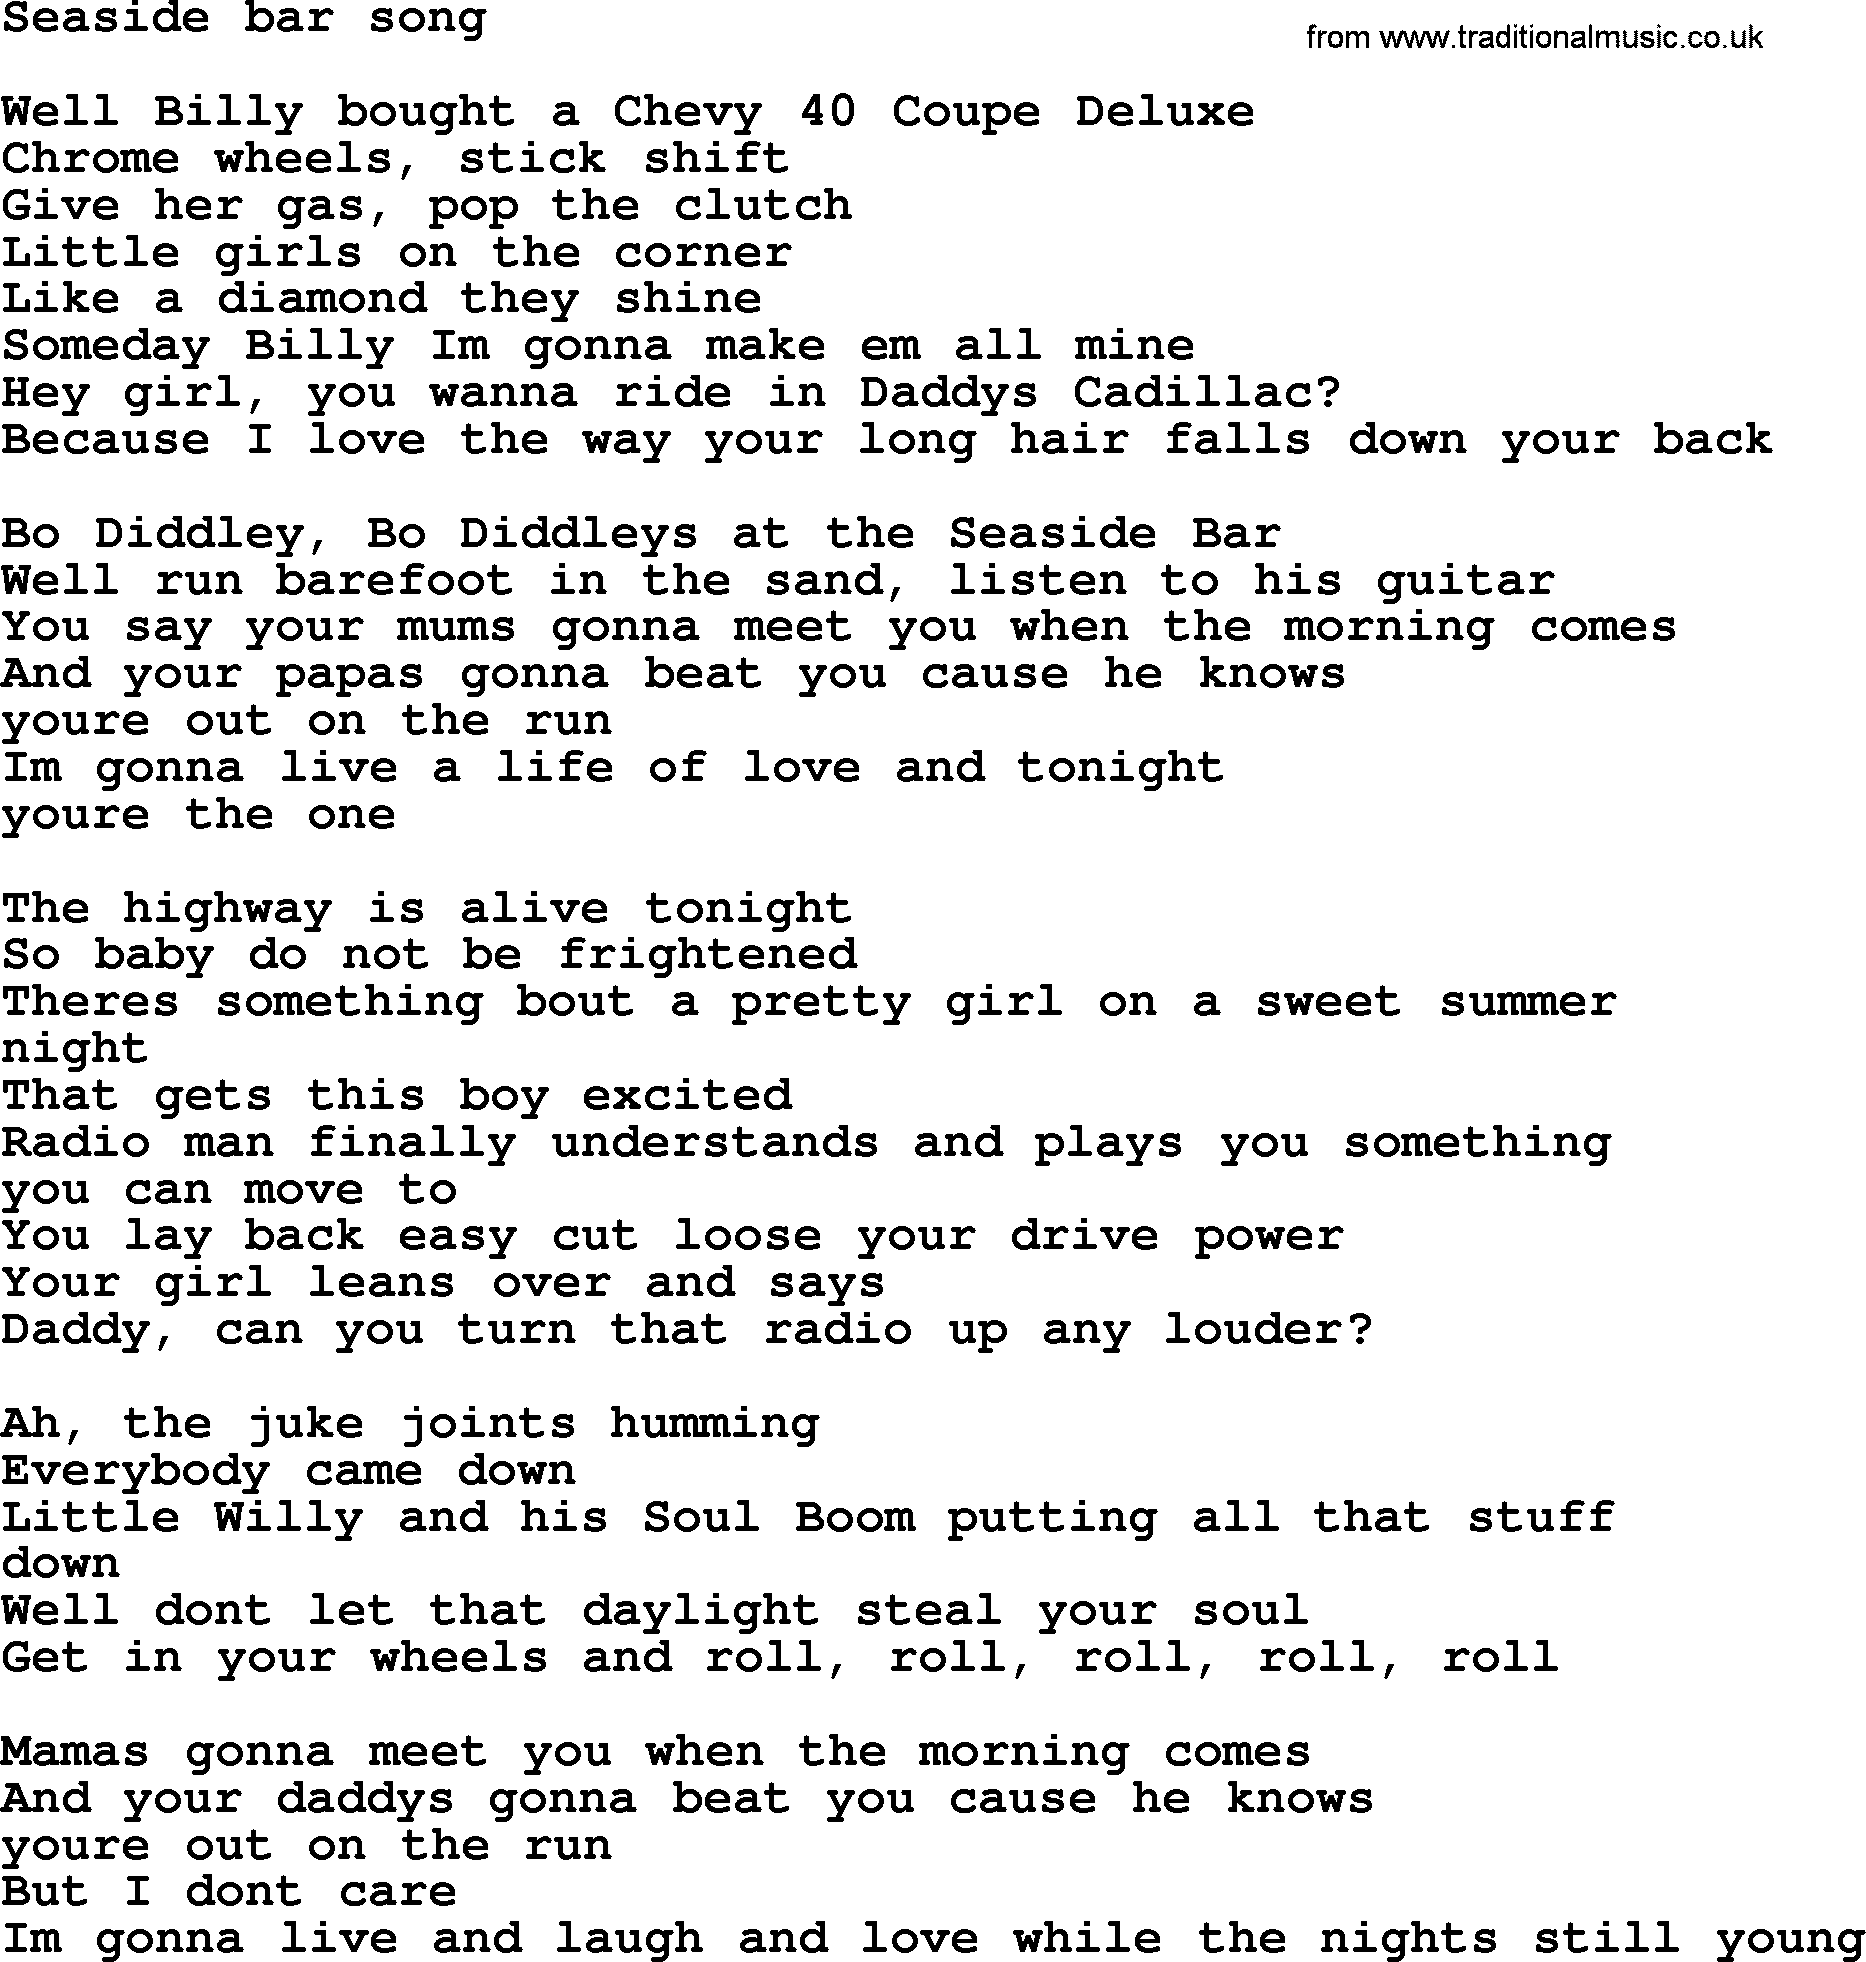 Bruce Springsteen song: Seaside Bar Song lyrics